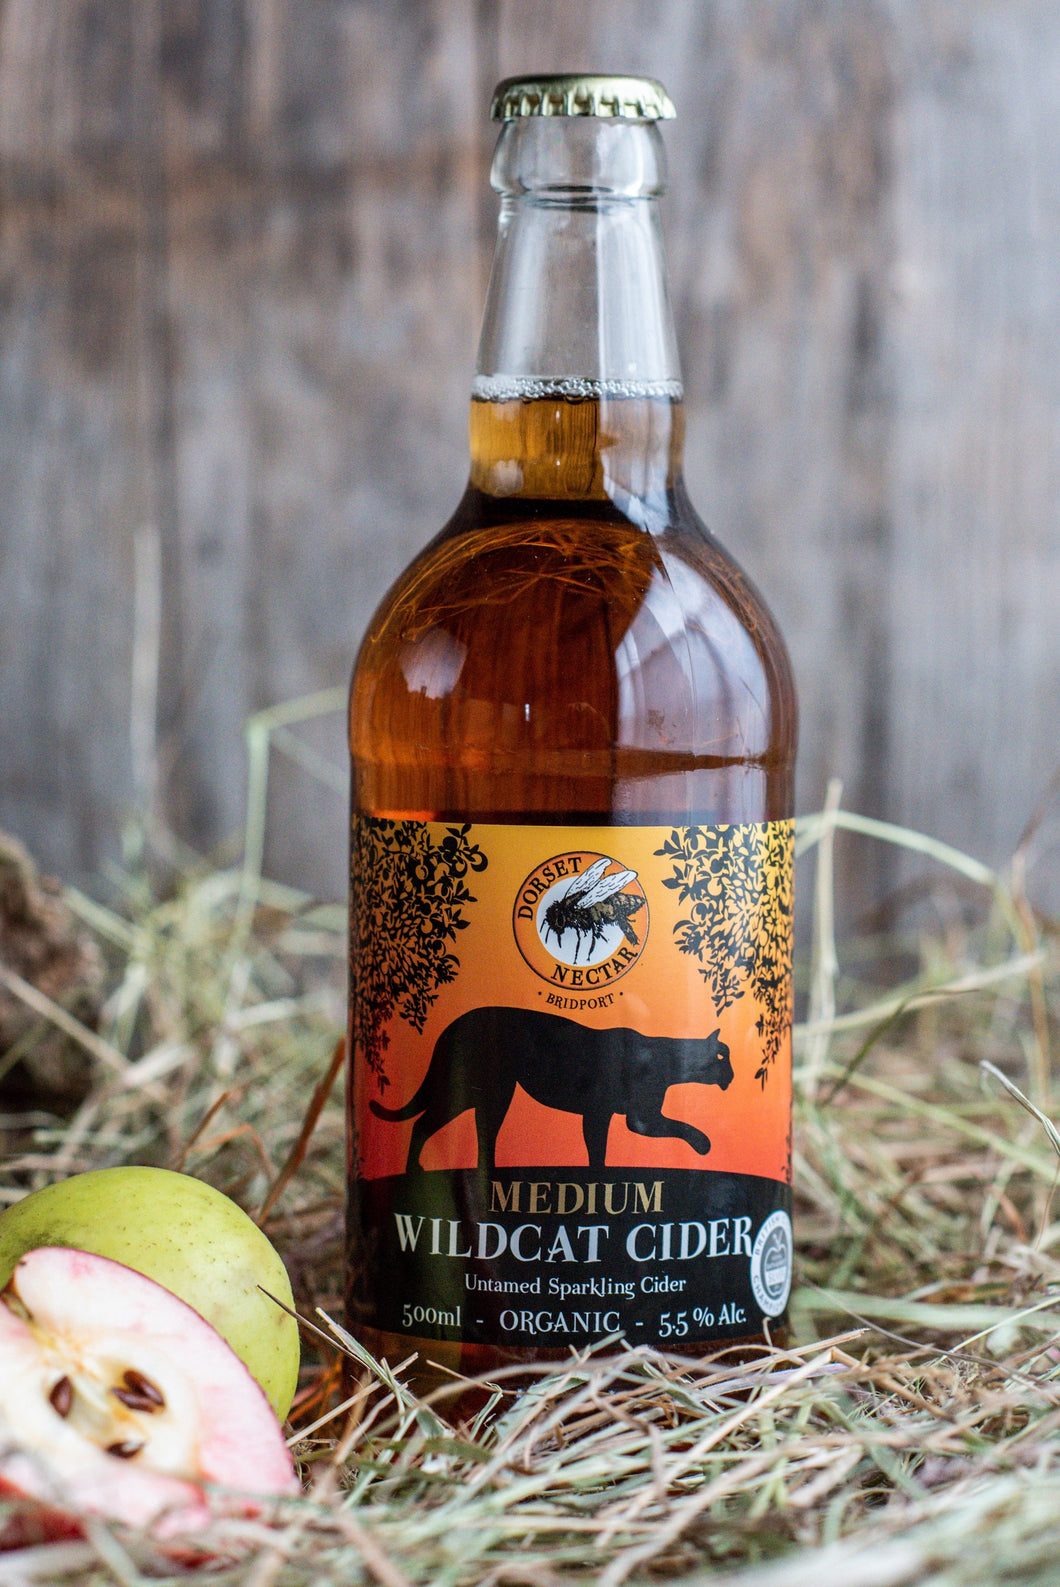 Wildcat Cider; Legendary Dorset cider 4.5% Alc.